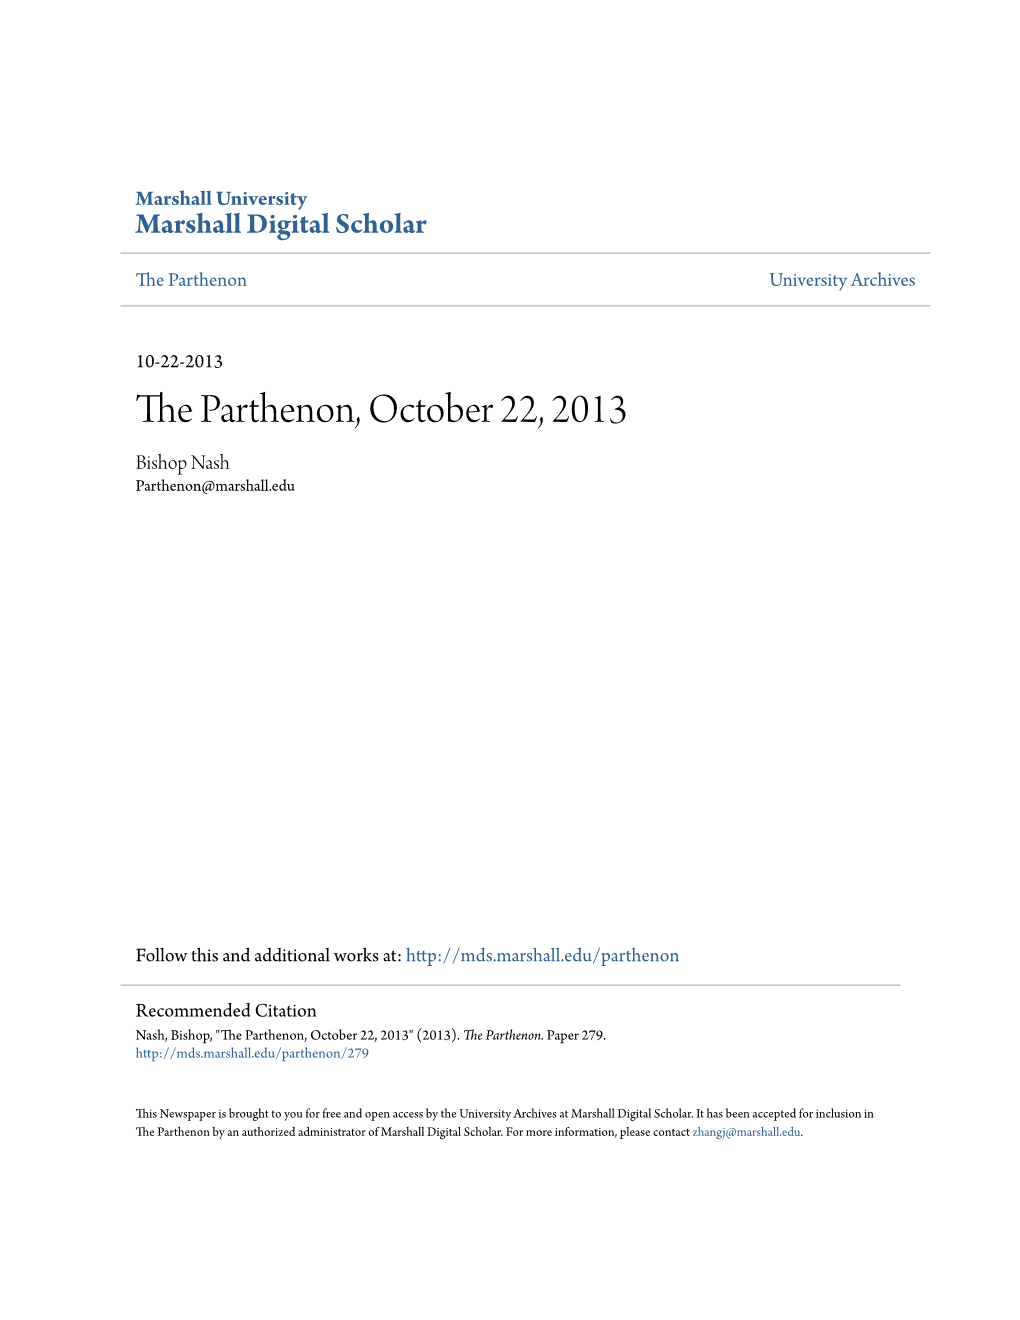 The Parthenon, October 22, 2013